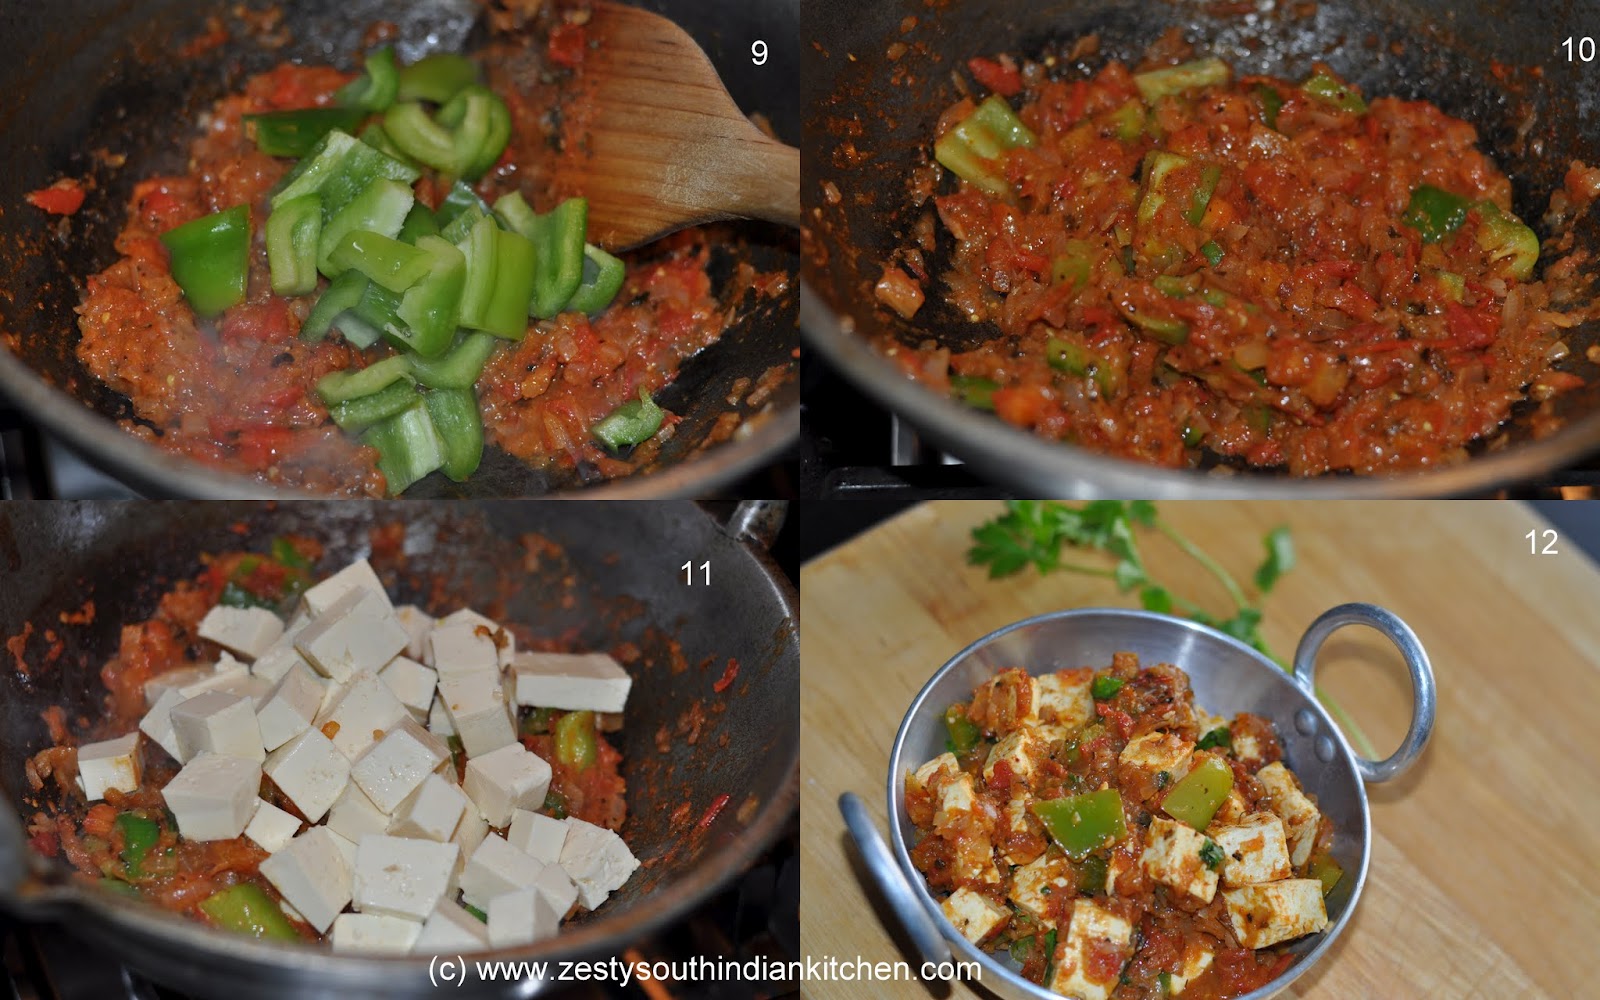 Indian Tofu Kadai Recipe - Swasthi's Recipes